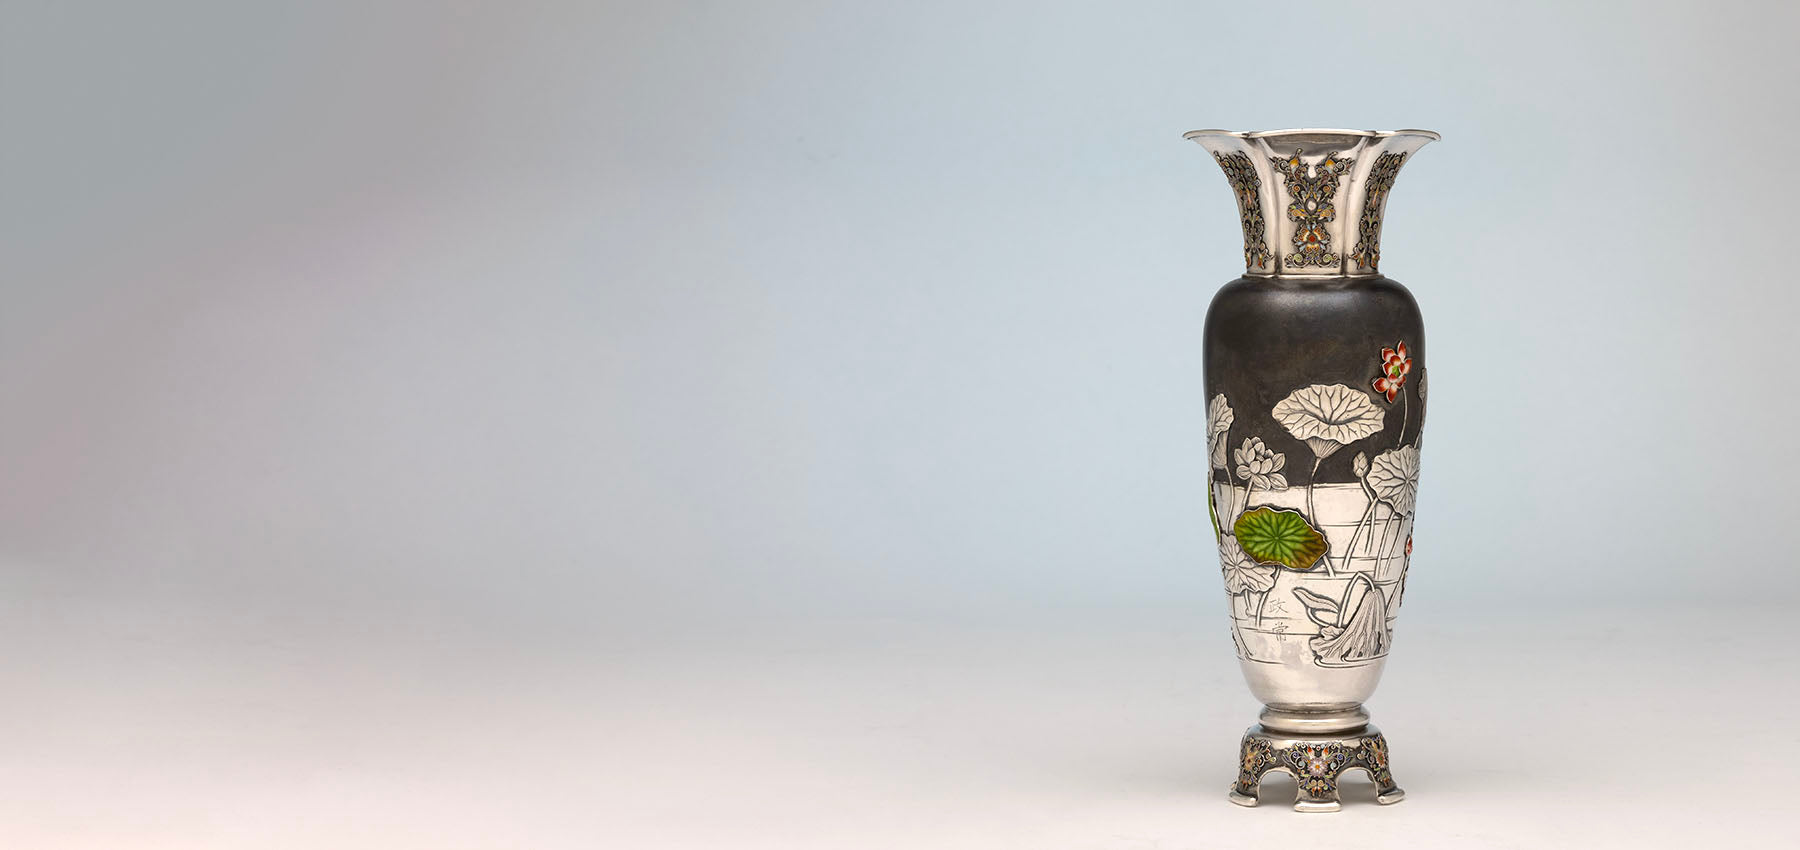 Gorham "Japanese Work" Antique Sterling Silver and Enamel 'Sample' Vase, Providence, RI, 1897